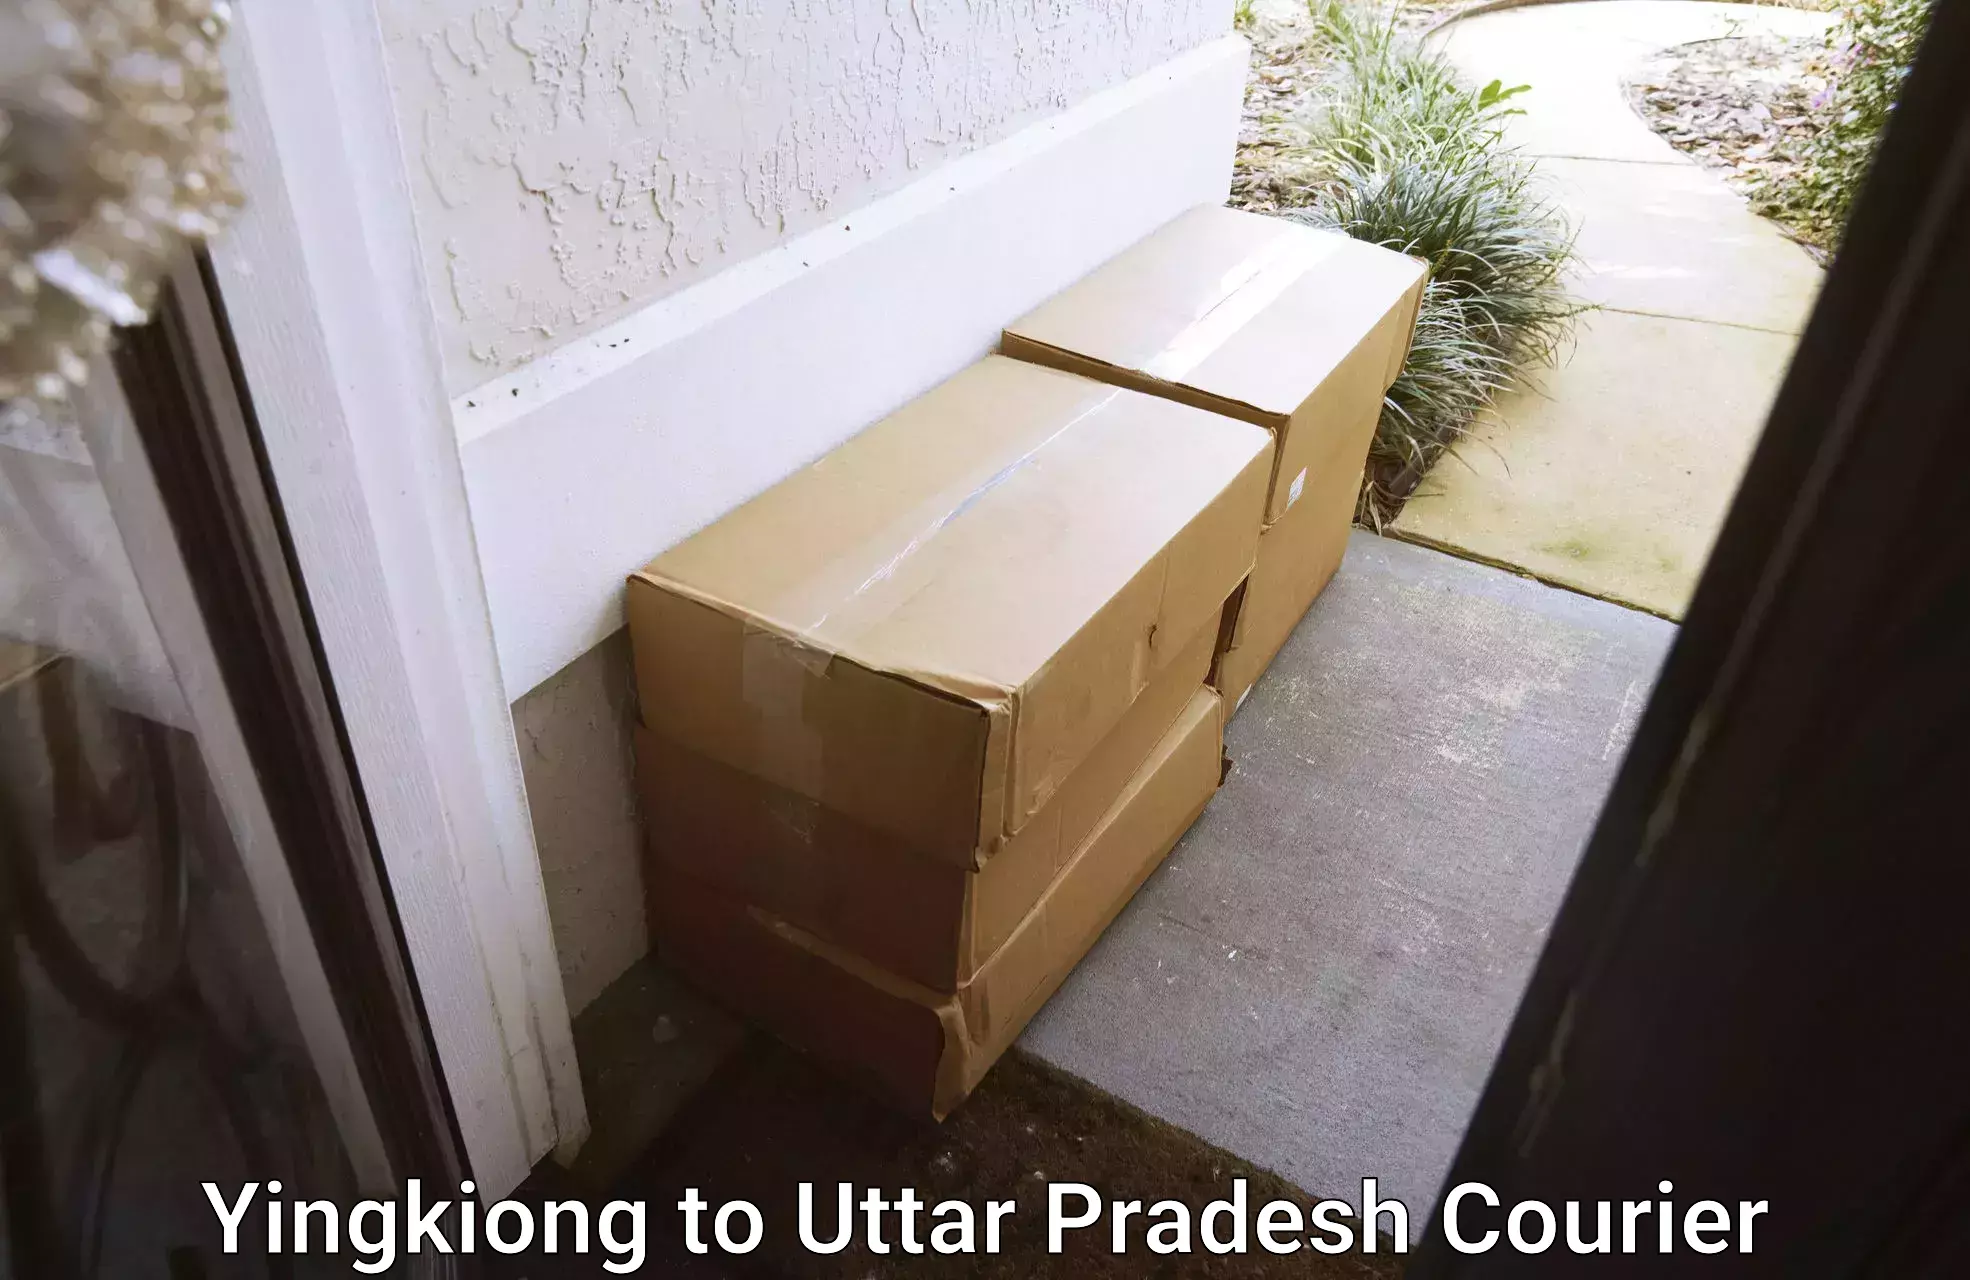 Global logistics network Yingkiong to Uttar Pradesh